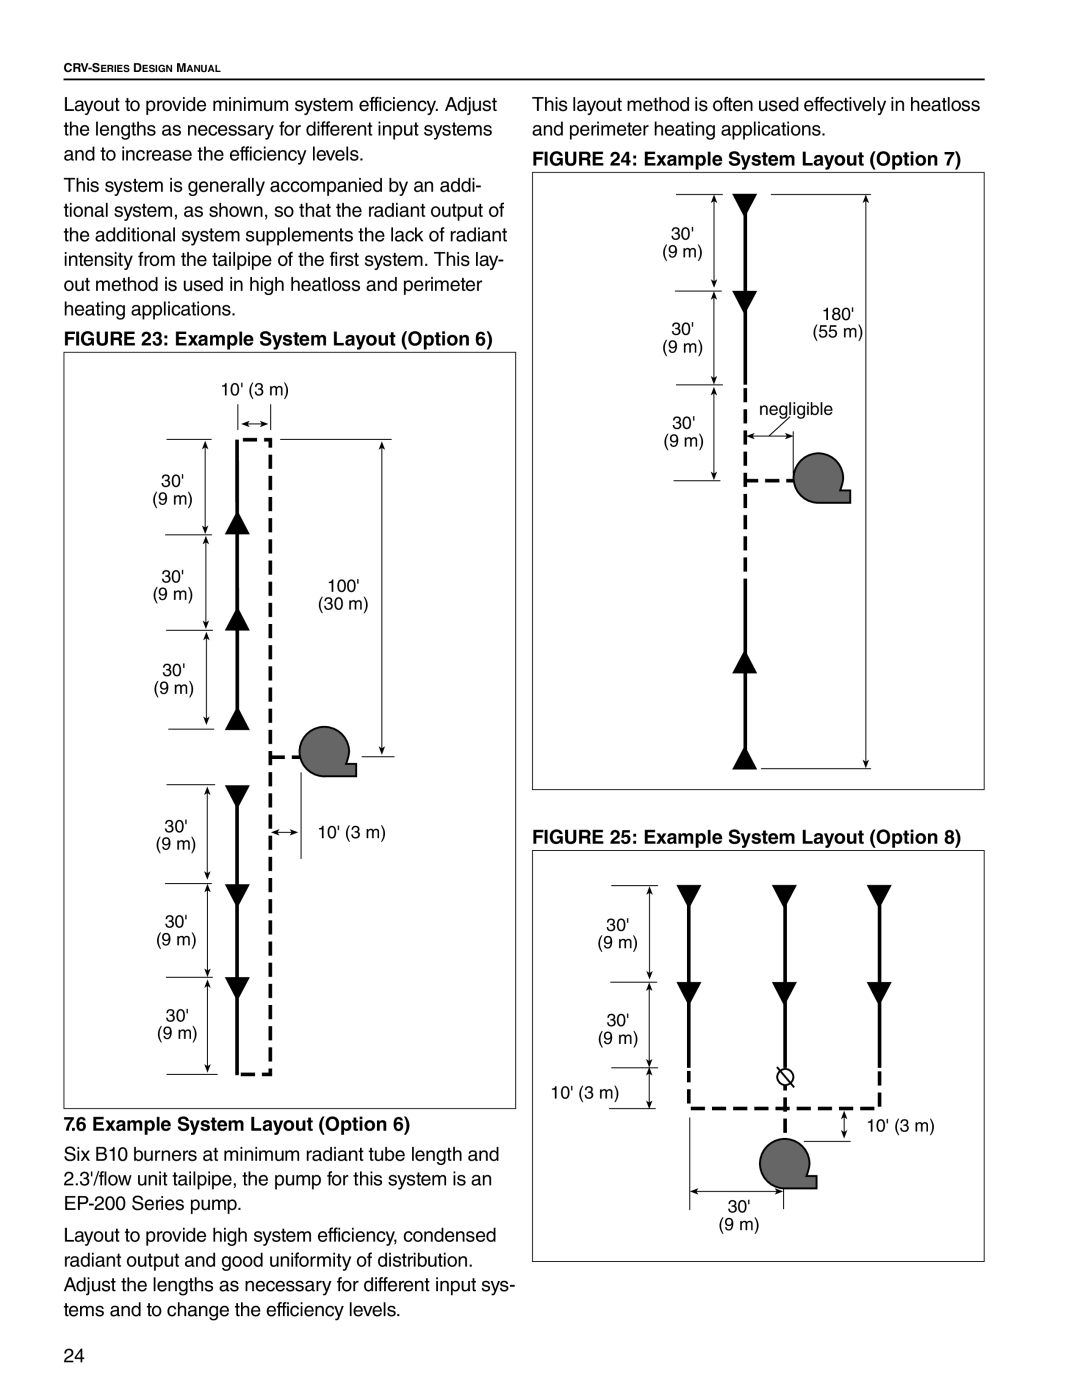 Roberts Gorden CRV-B-9 service manual Example System Layout Option 